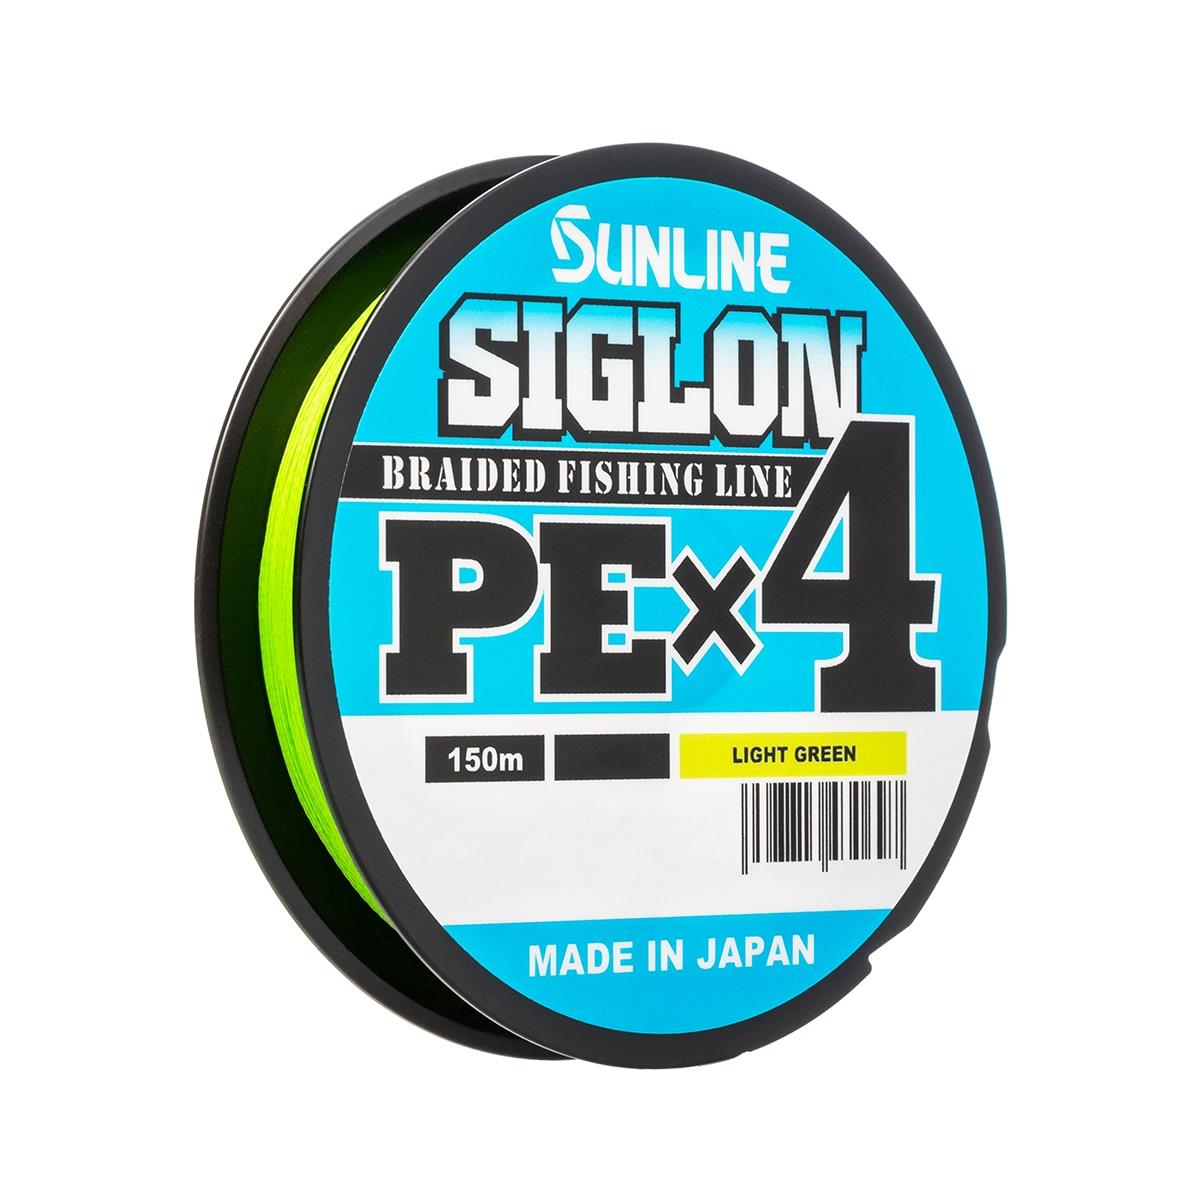 Шнур SIGLON PE×4 150 м (Light green) Sunline шнур для вязания 100% полиэфир 1мм 200м 75±10гр 14 светло серый